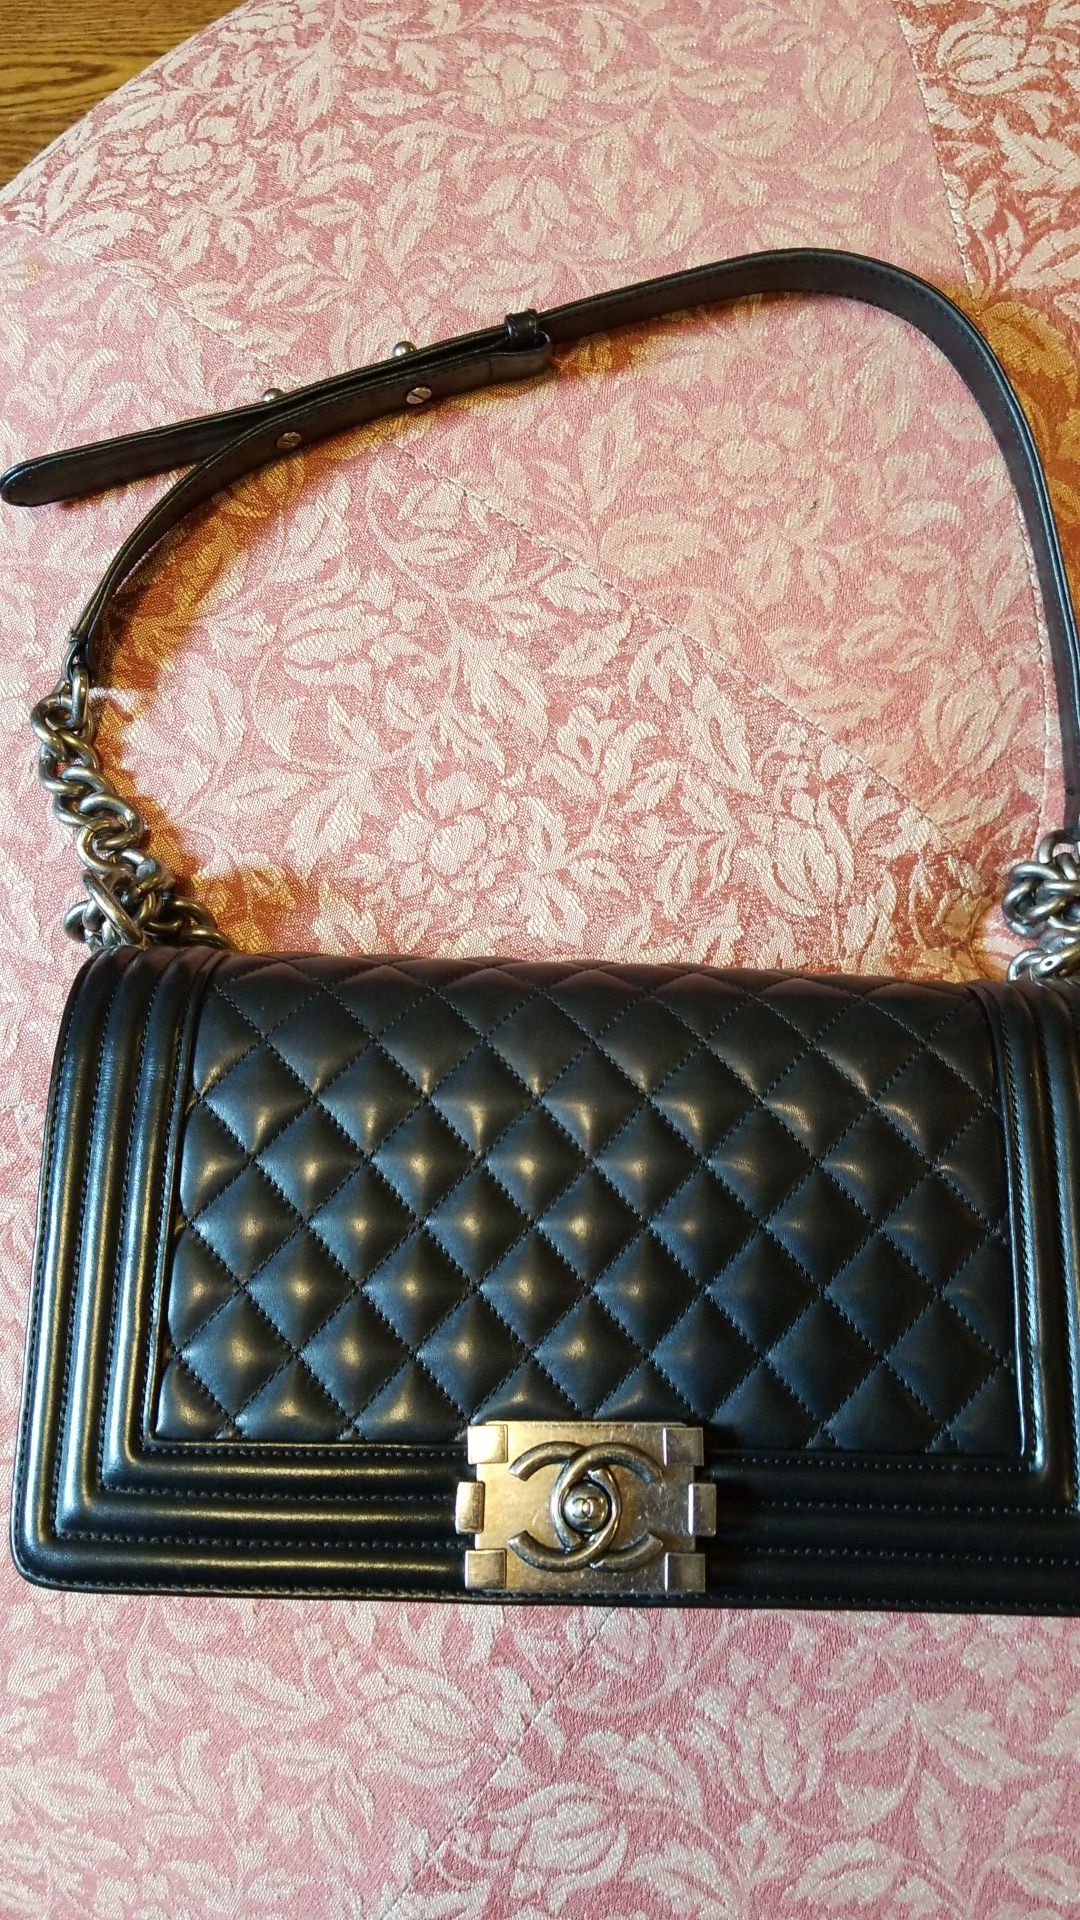 Chanel Le Boy leather black bag